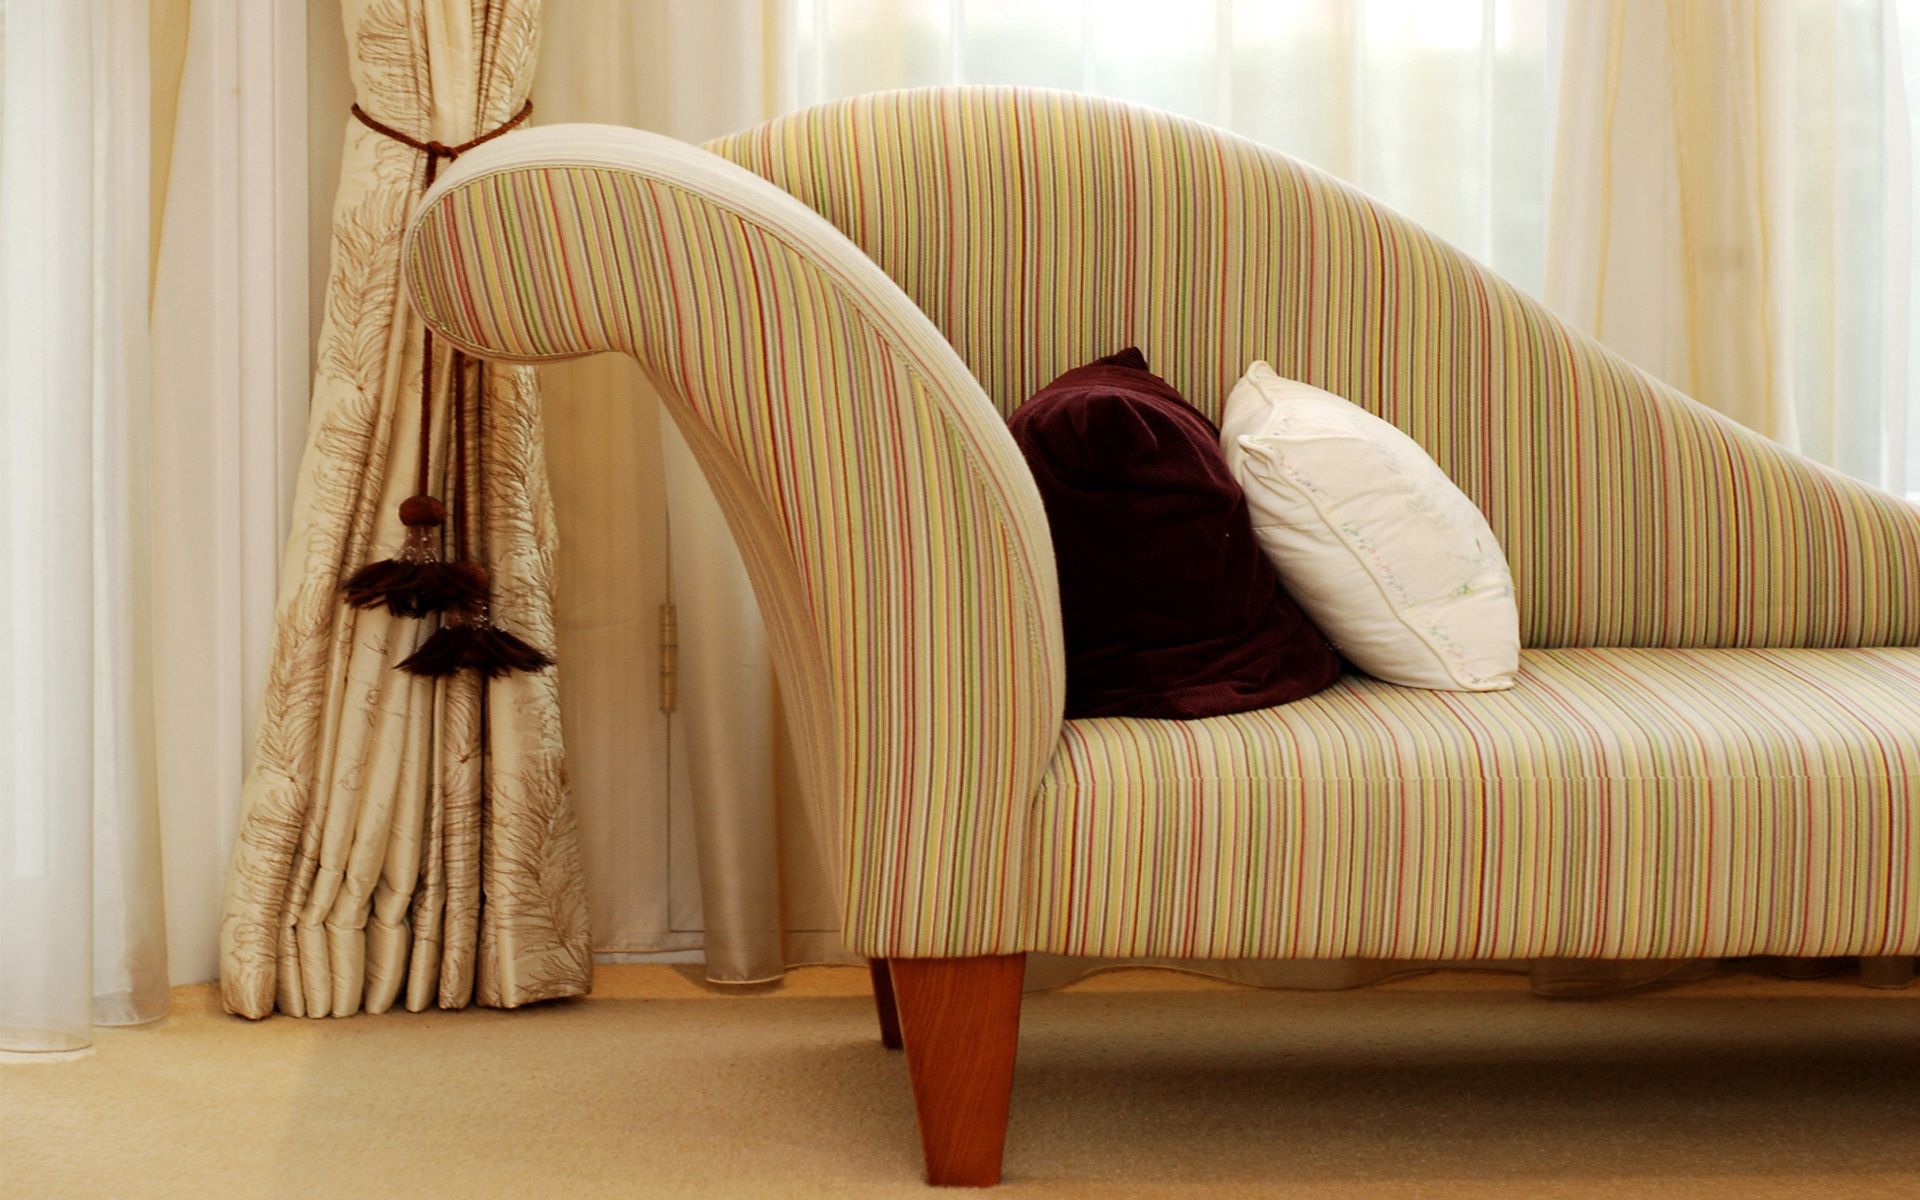 miscellanea, miscellaneous, style, sofa, furniture, cushions, pillows Aesthetic wallpaper